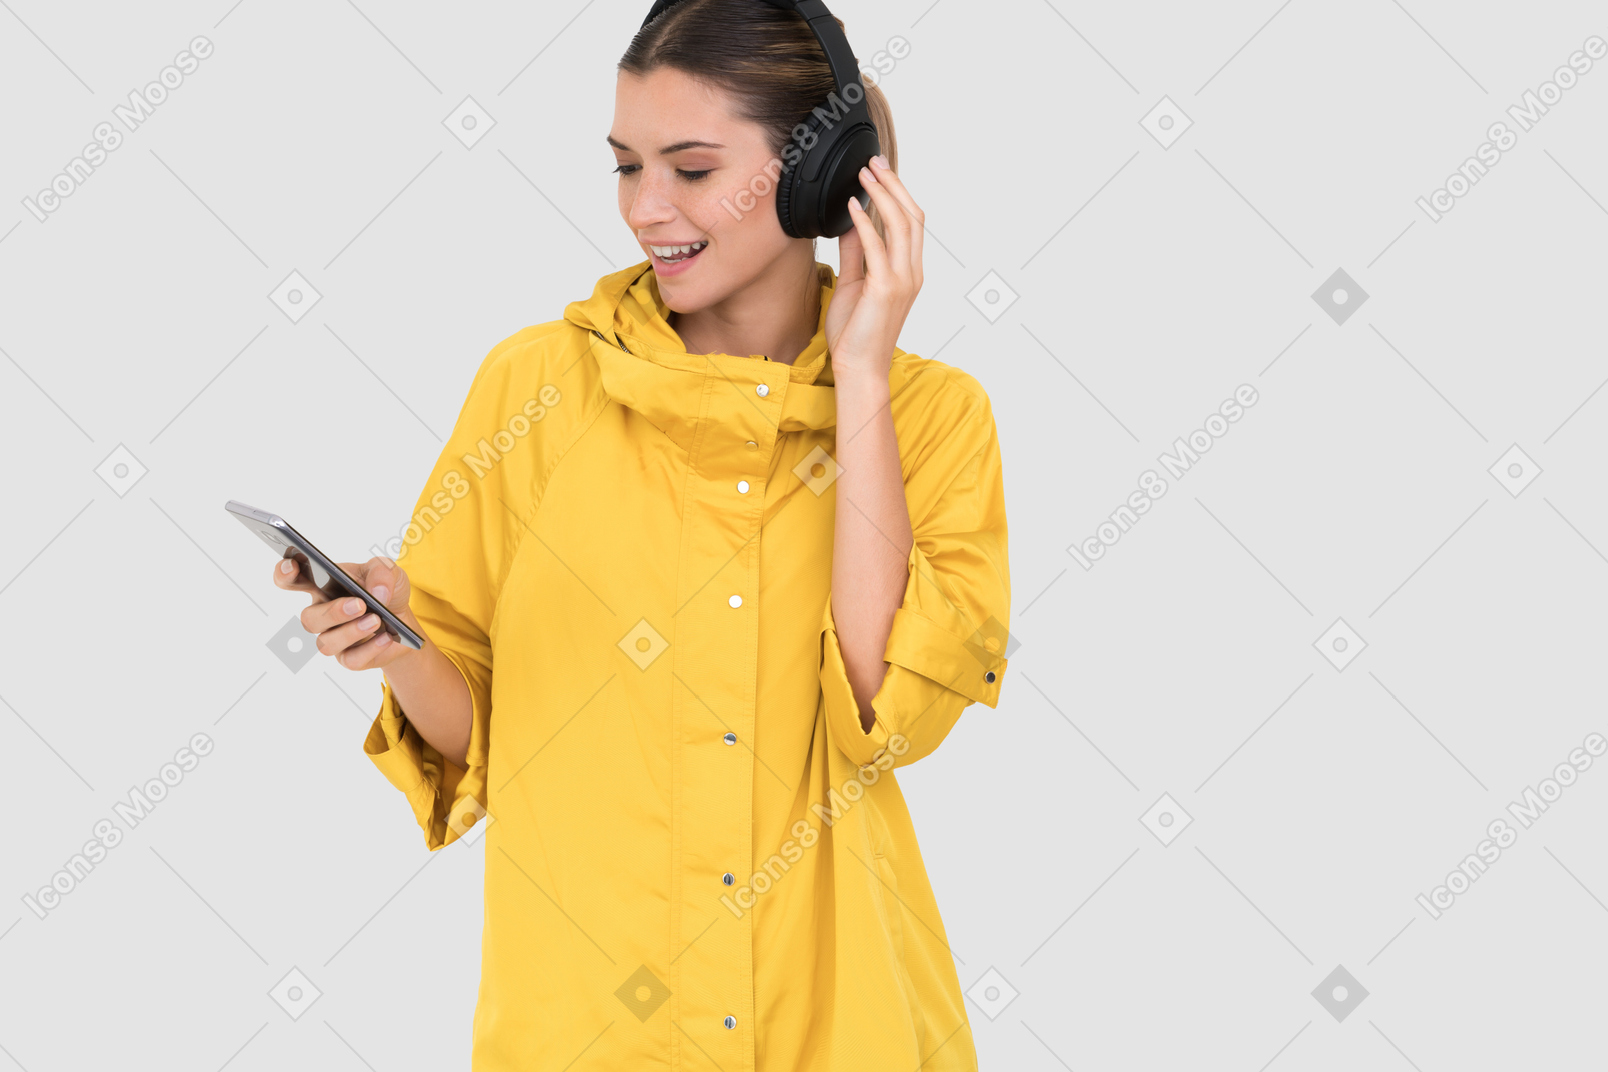 Woman in yellow raincoat listening to music